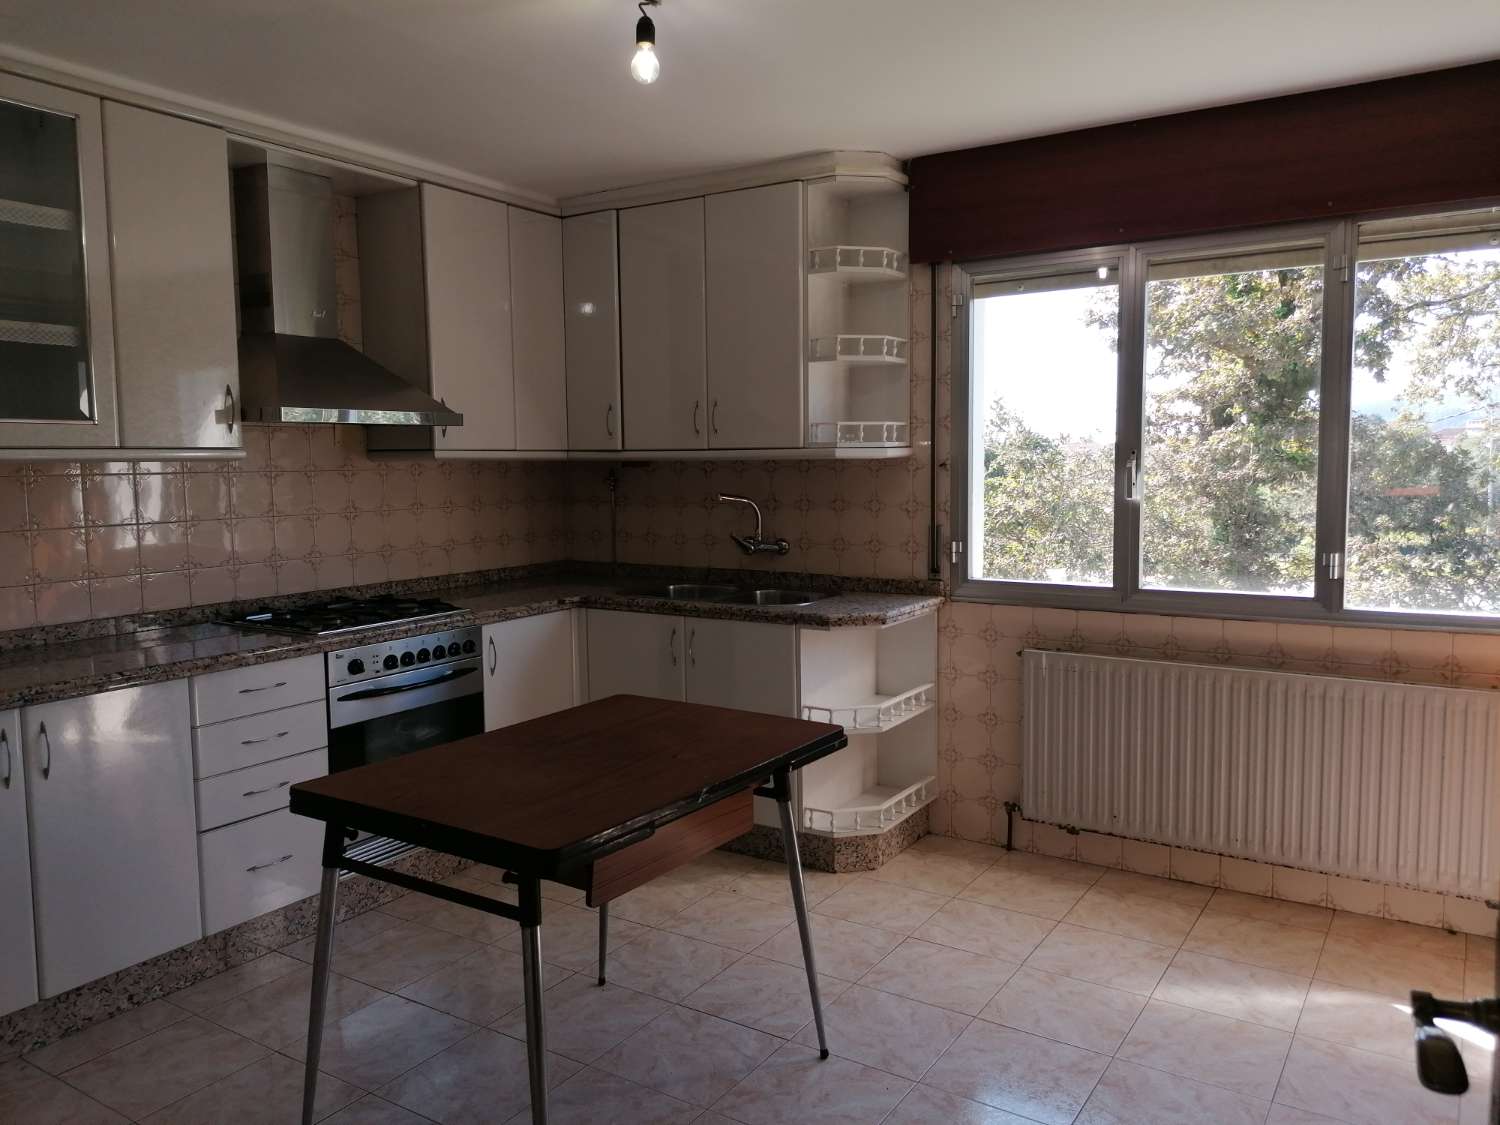 Pontevedra: A7134: Dům s finca na prodej 4 km od Pontevedra...